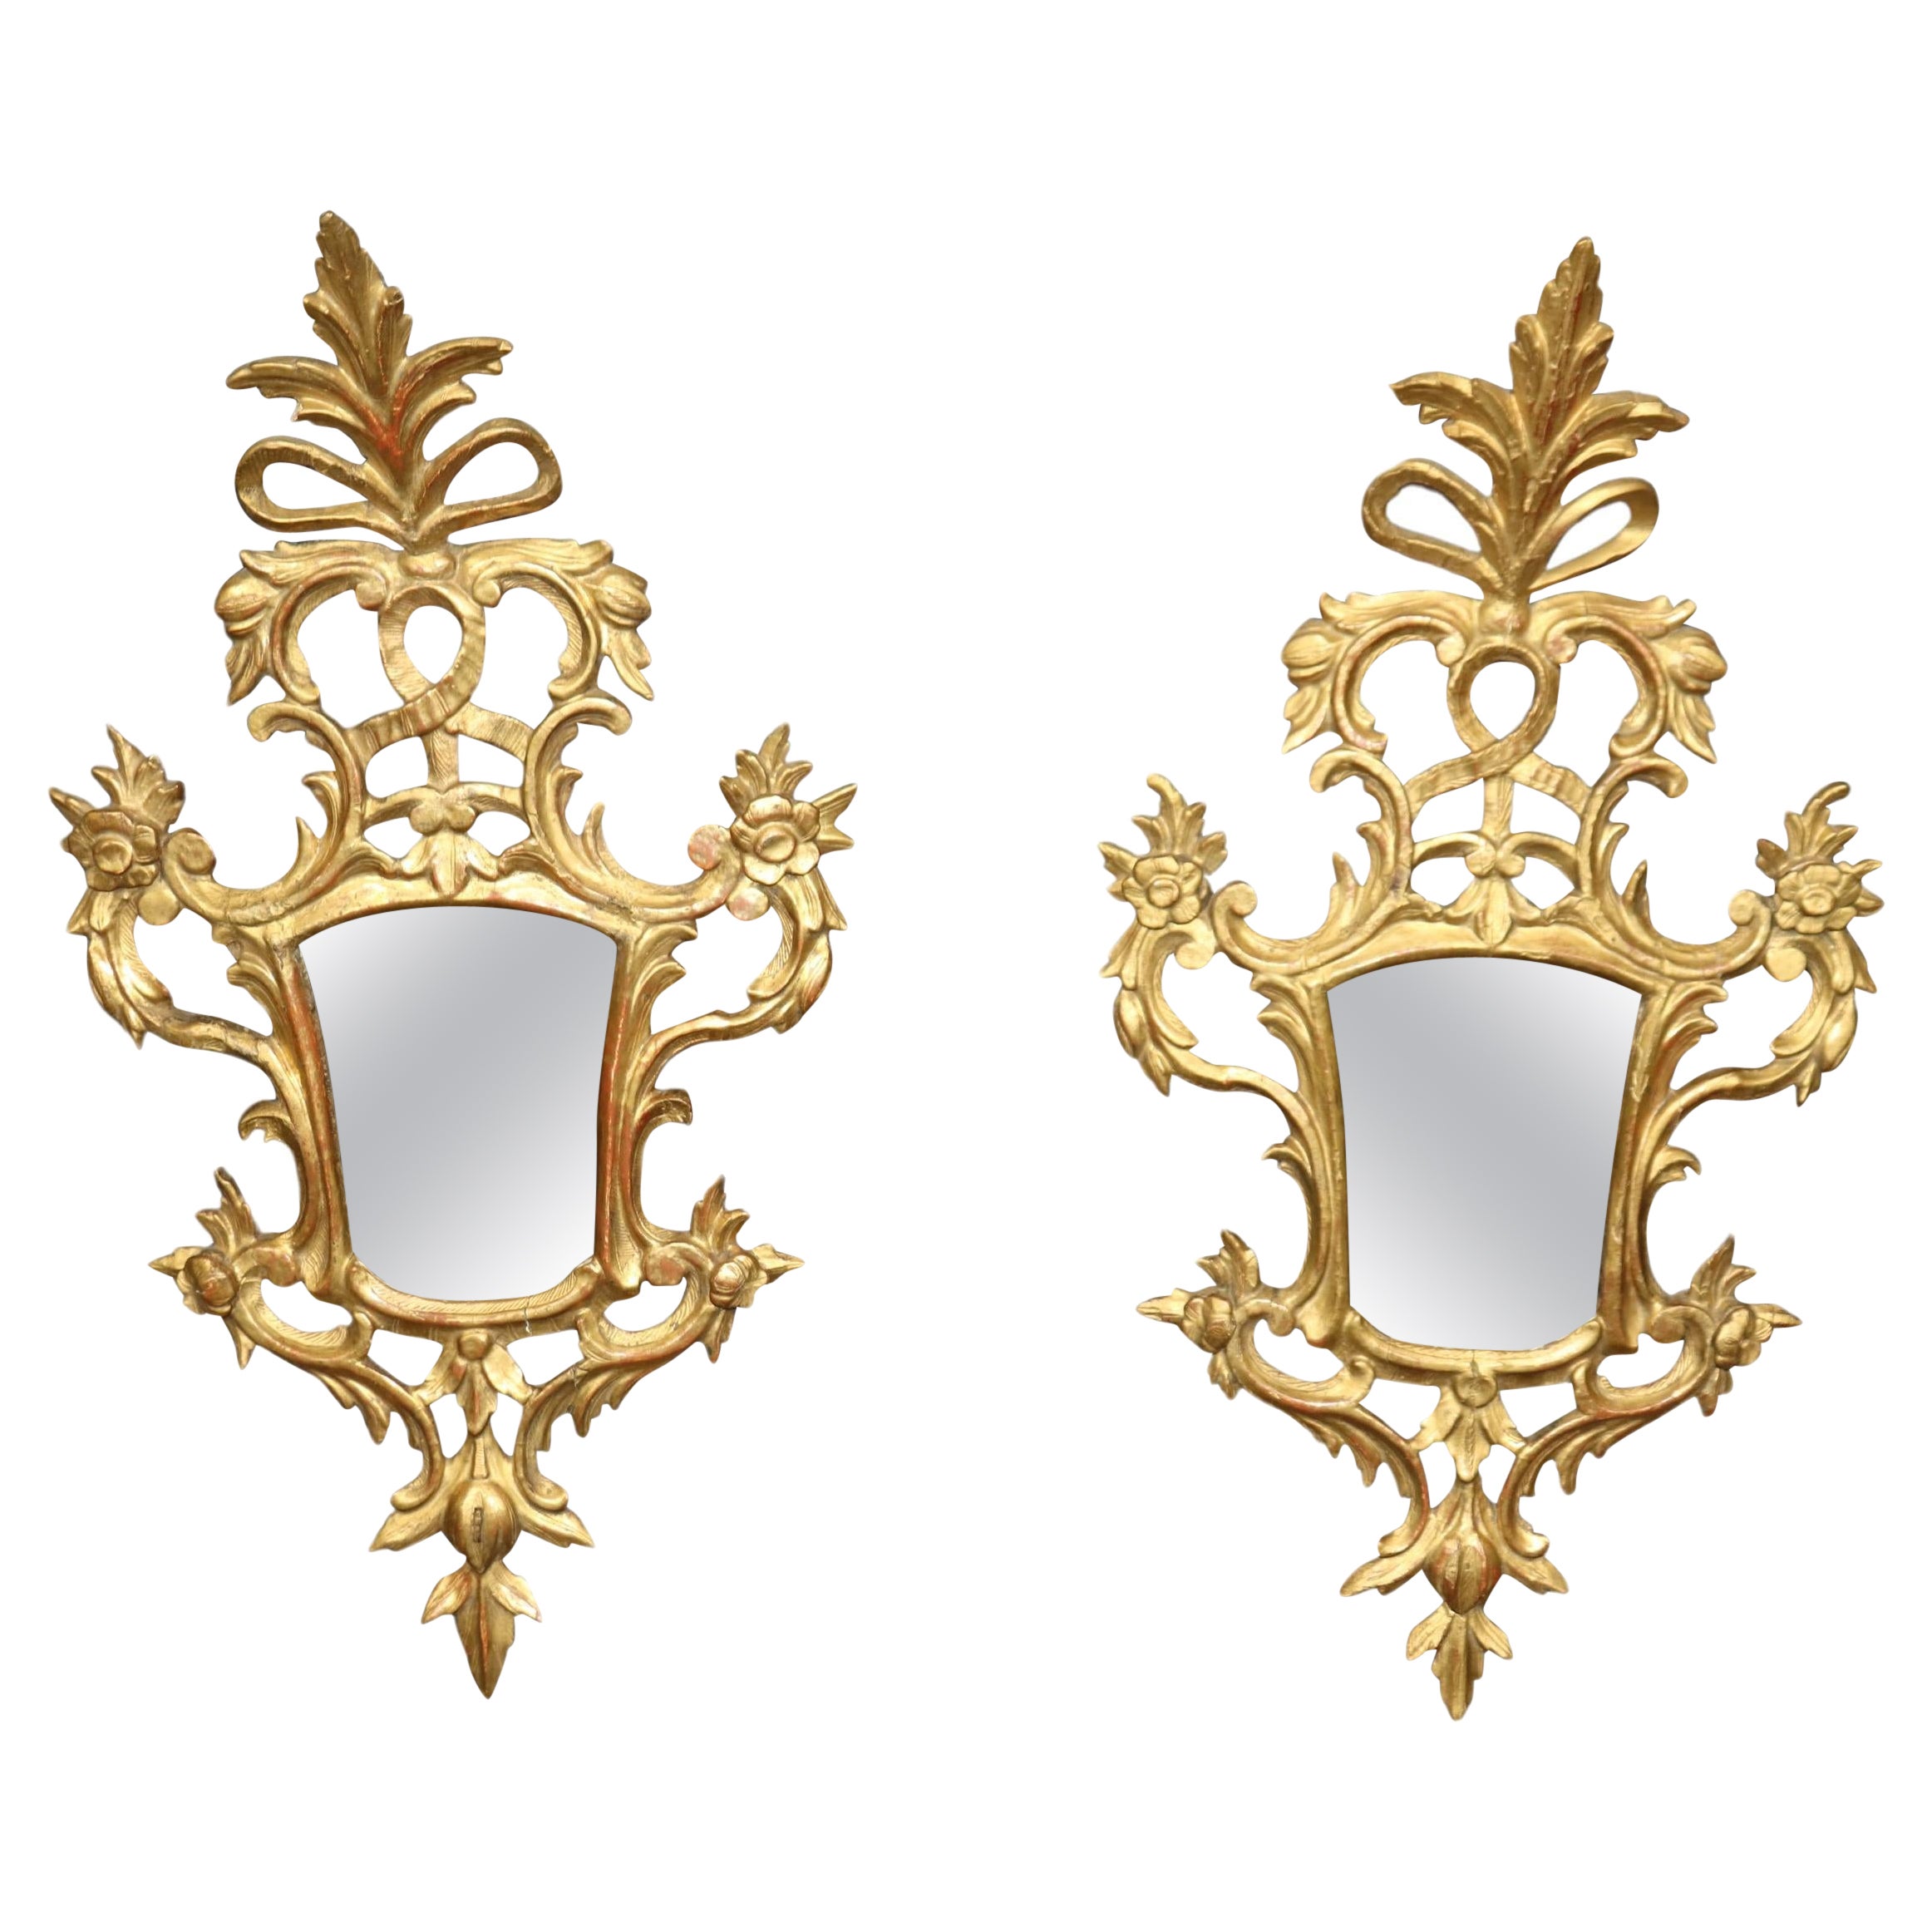 Fantastic Diminutive Water Gilded Carved Italian Rococo Mirrors Circa 1820s